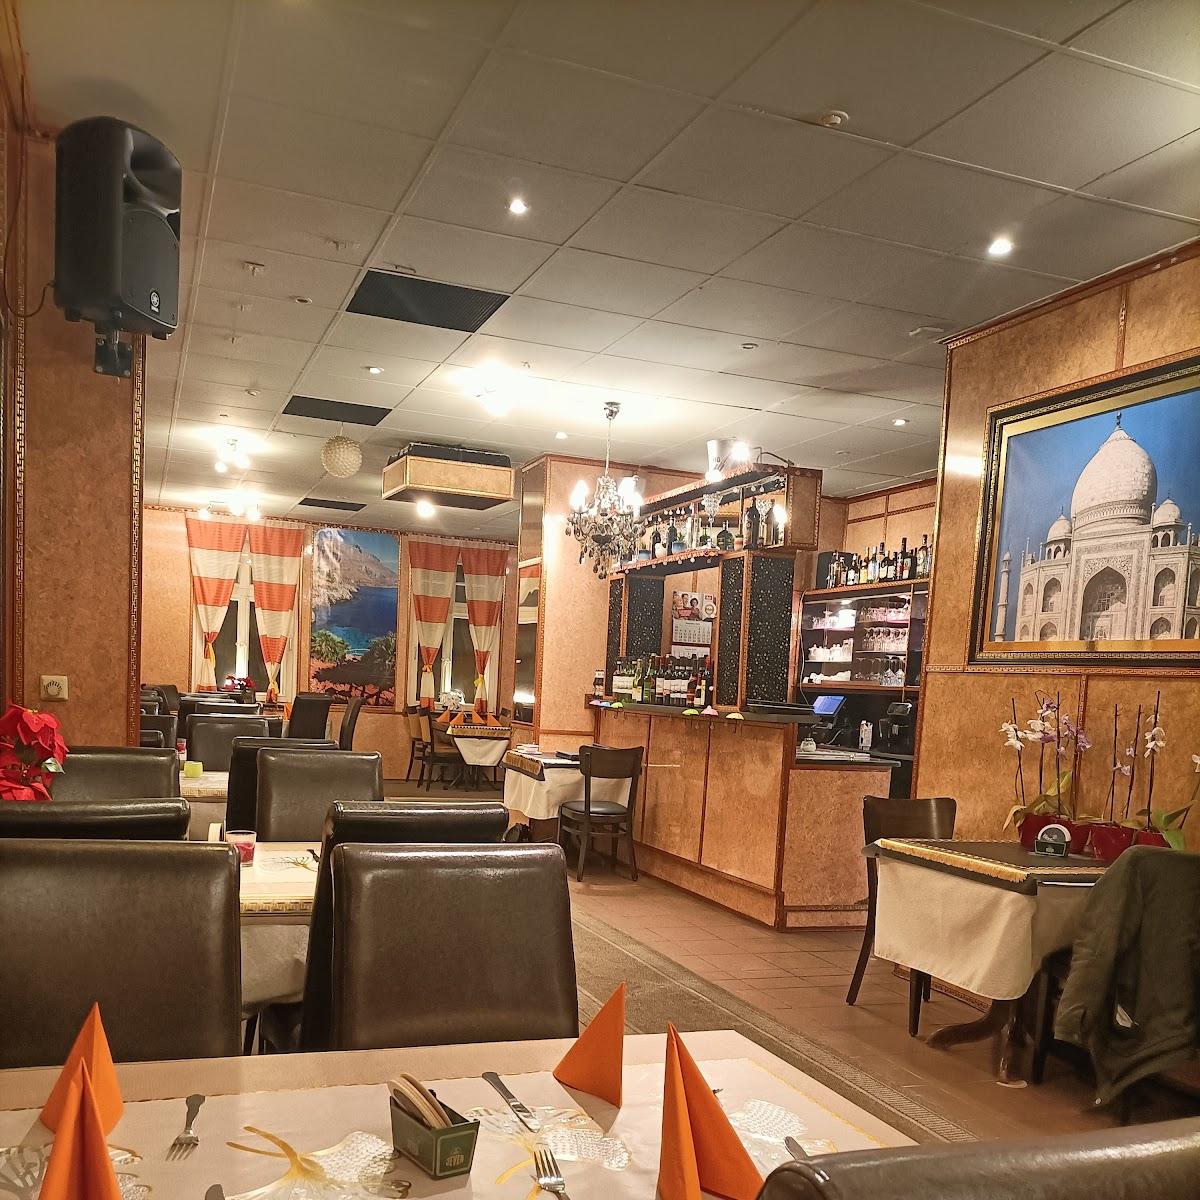 Restaurant "Tandoor shalimar indische spezialitäten Restaurants" in Bad Iburg